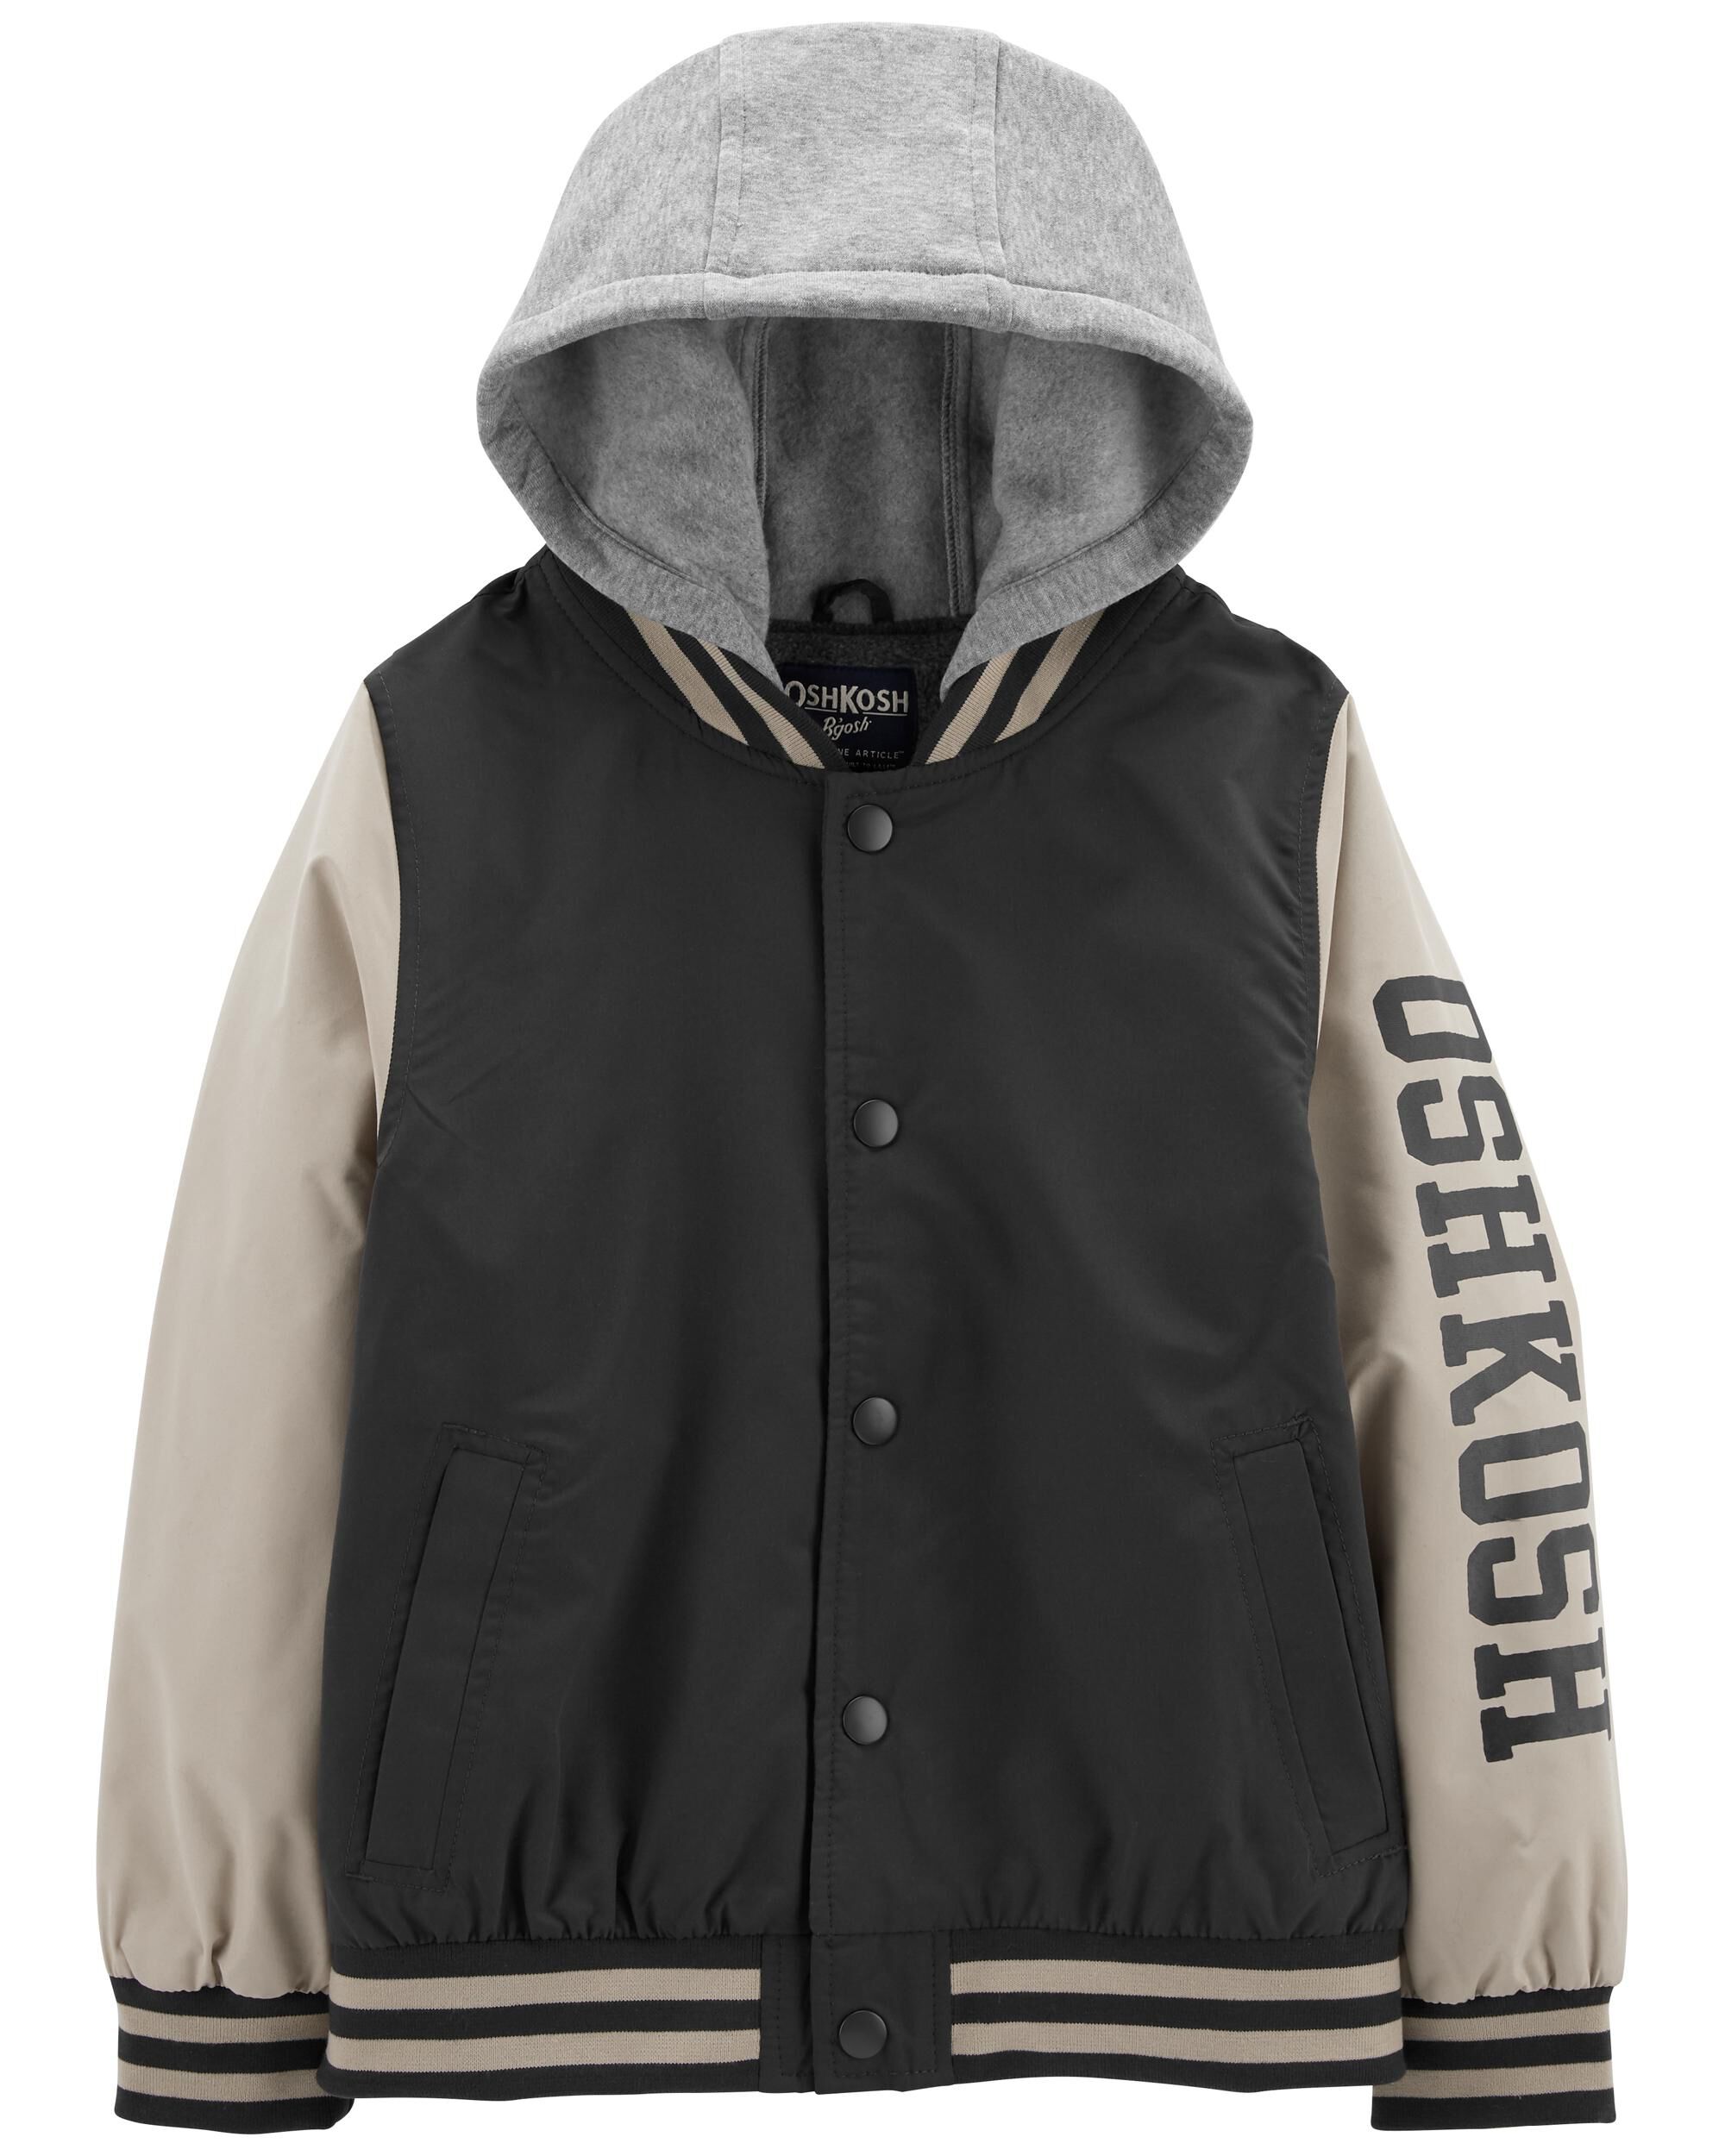 Osh Kosh B'gosh Toddler Boys Navy & Grey Parka Outerwear Coat Size 2T 3T 4T 